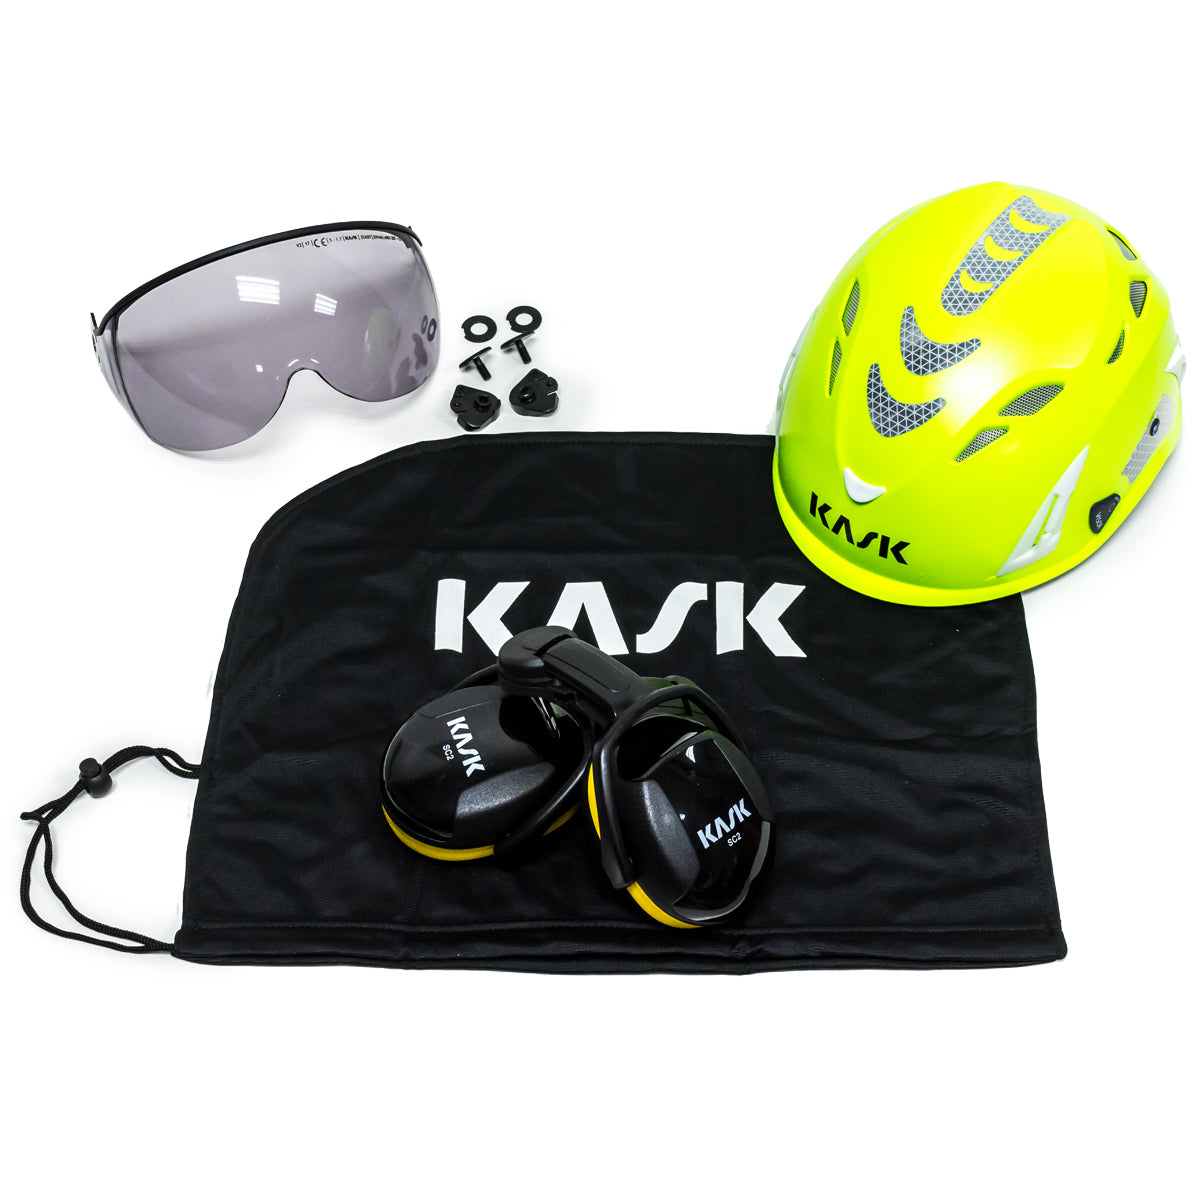 Kask Professional Arborist Kit de casco súper plasma de color lima fluorescente de alta visibilidad